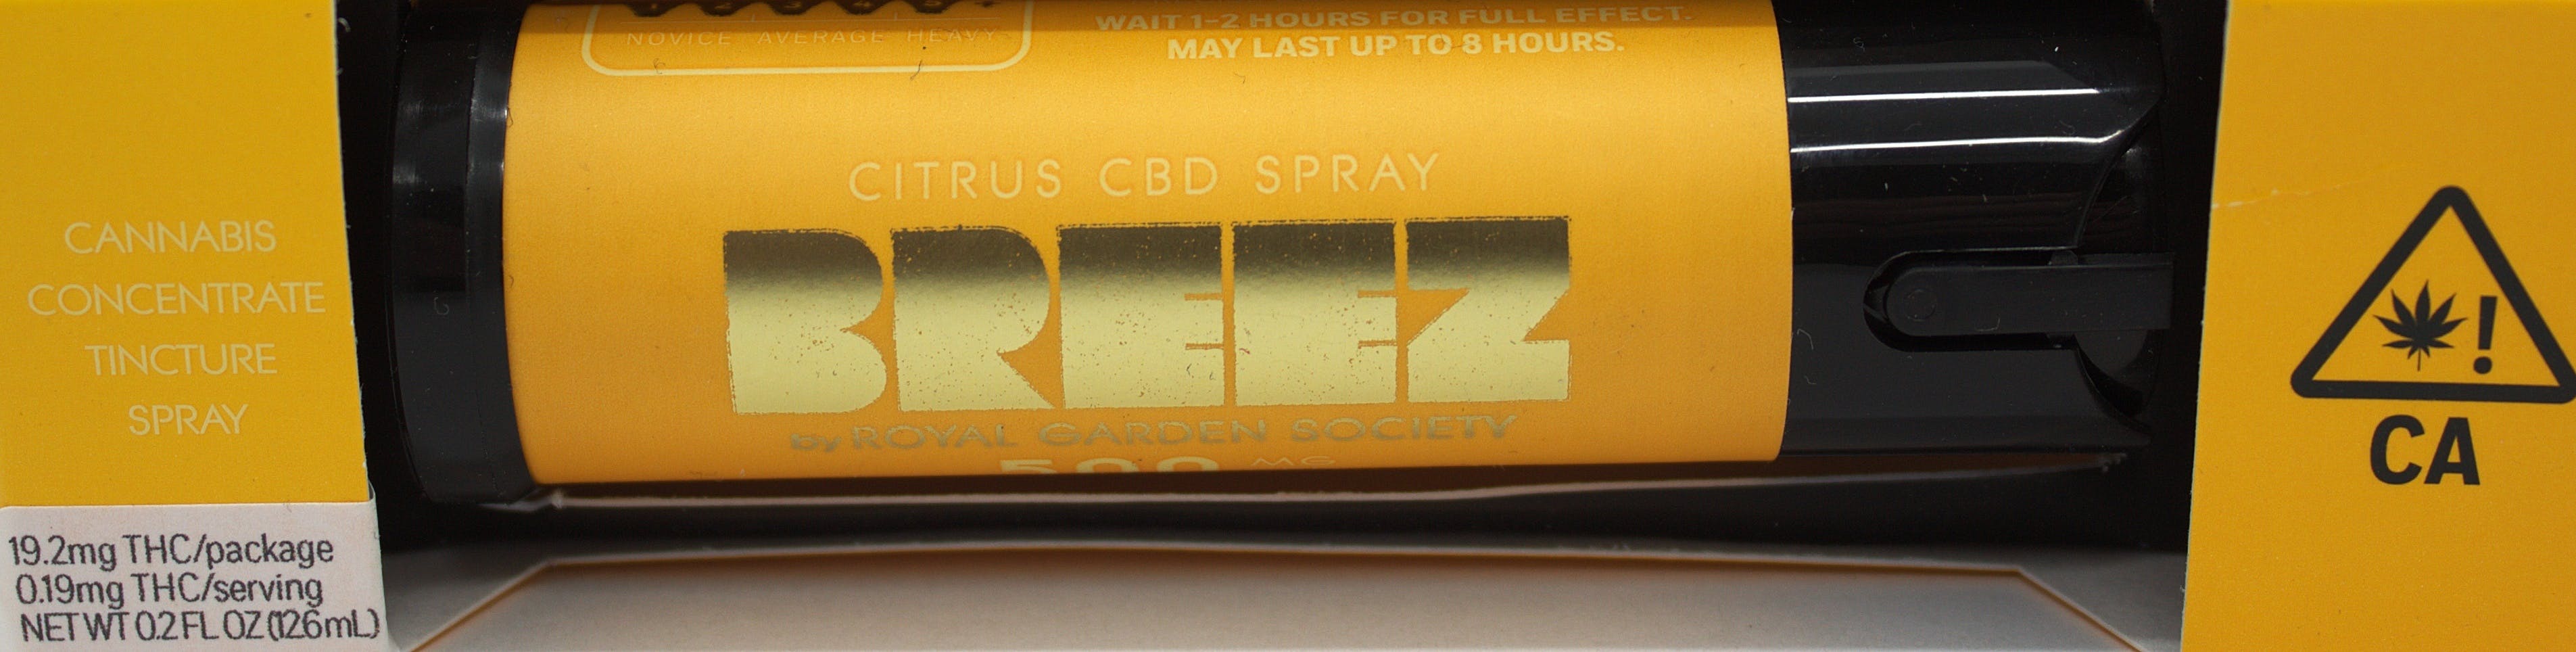 Breez Citrus CBD Spray